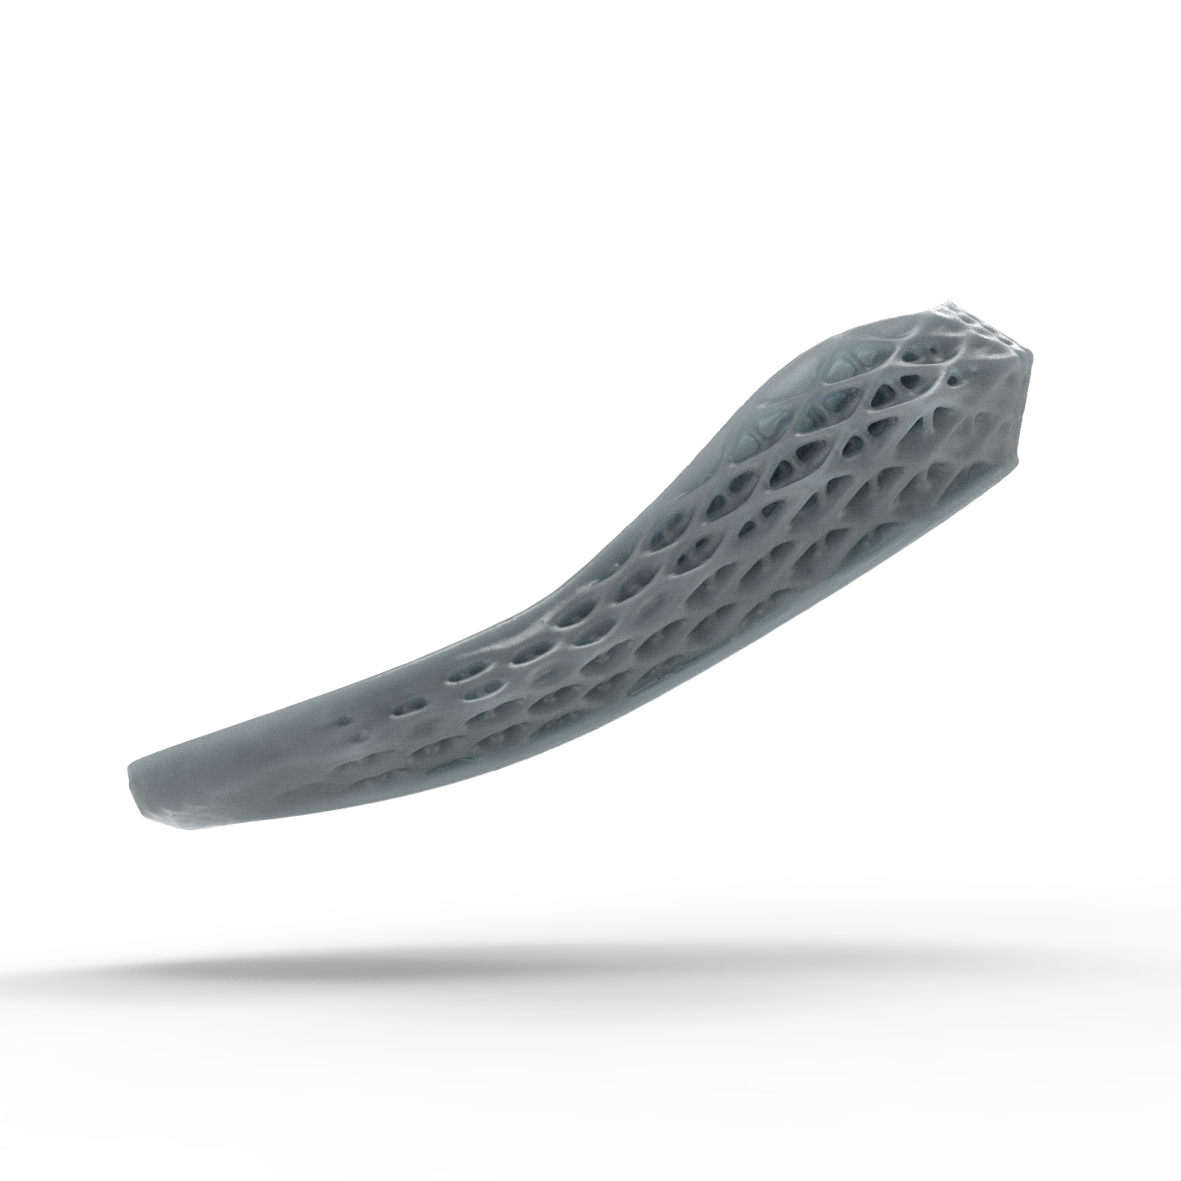 productdesign concept shoes 3d modeling parametric design parametric design ComputaionalDesign computational ParametricDesign